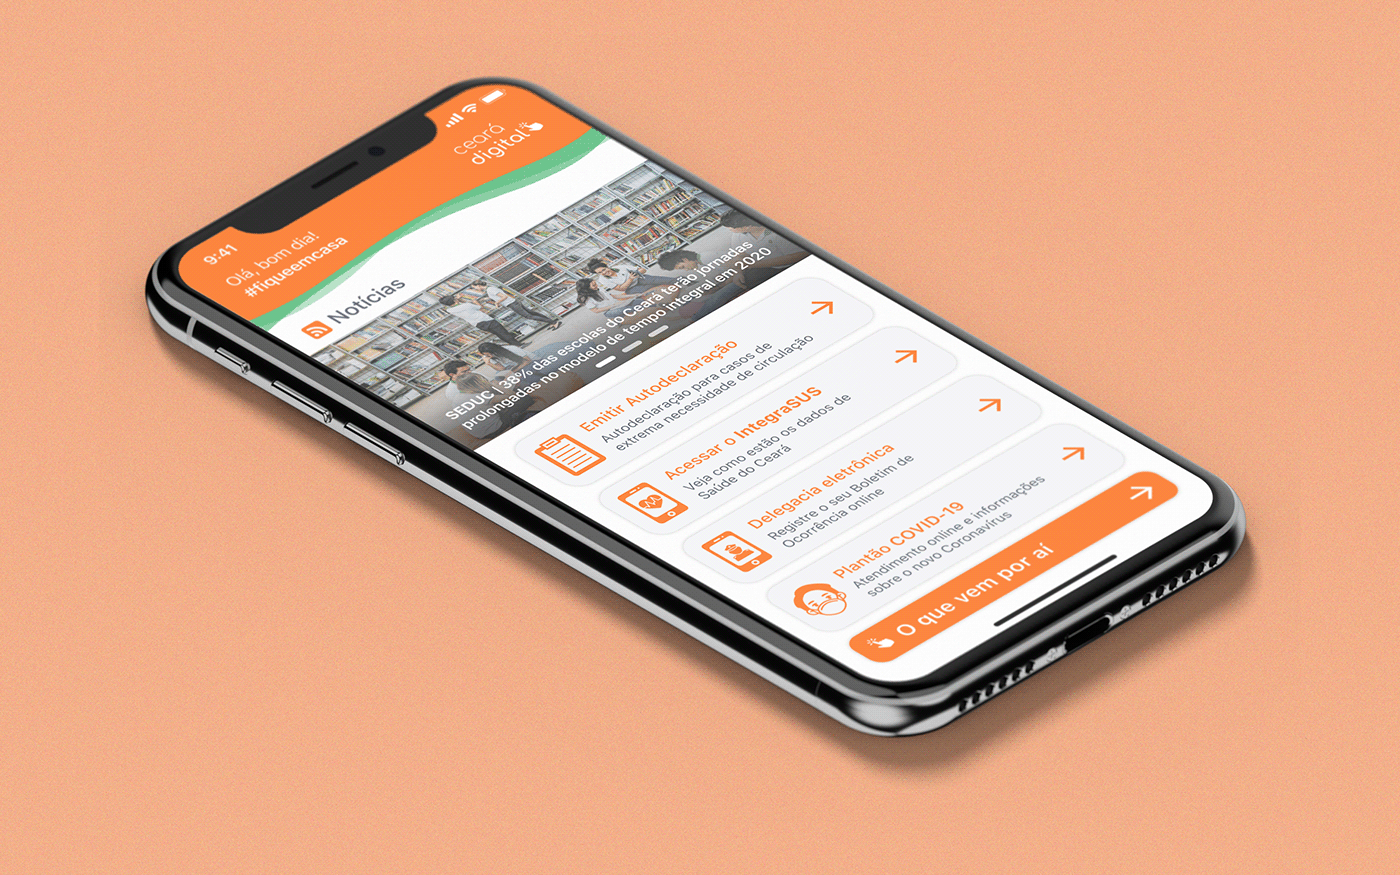 aplicativo app appcity ceará fortaleza SmartCity uidesign uxdesign